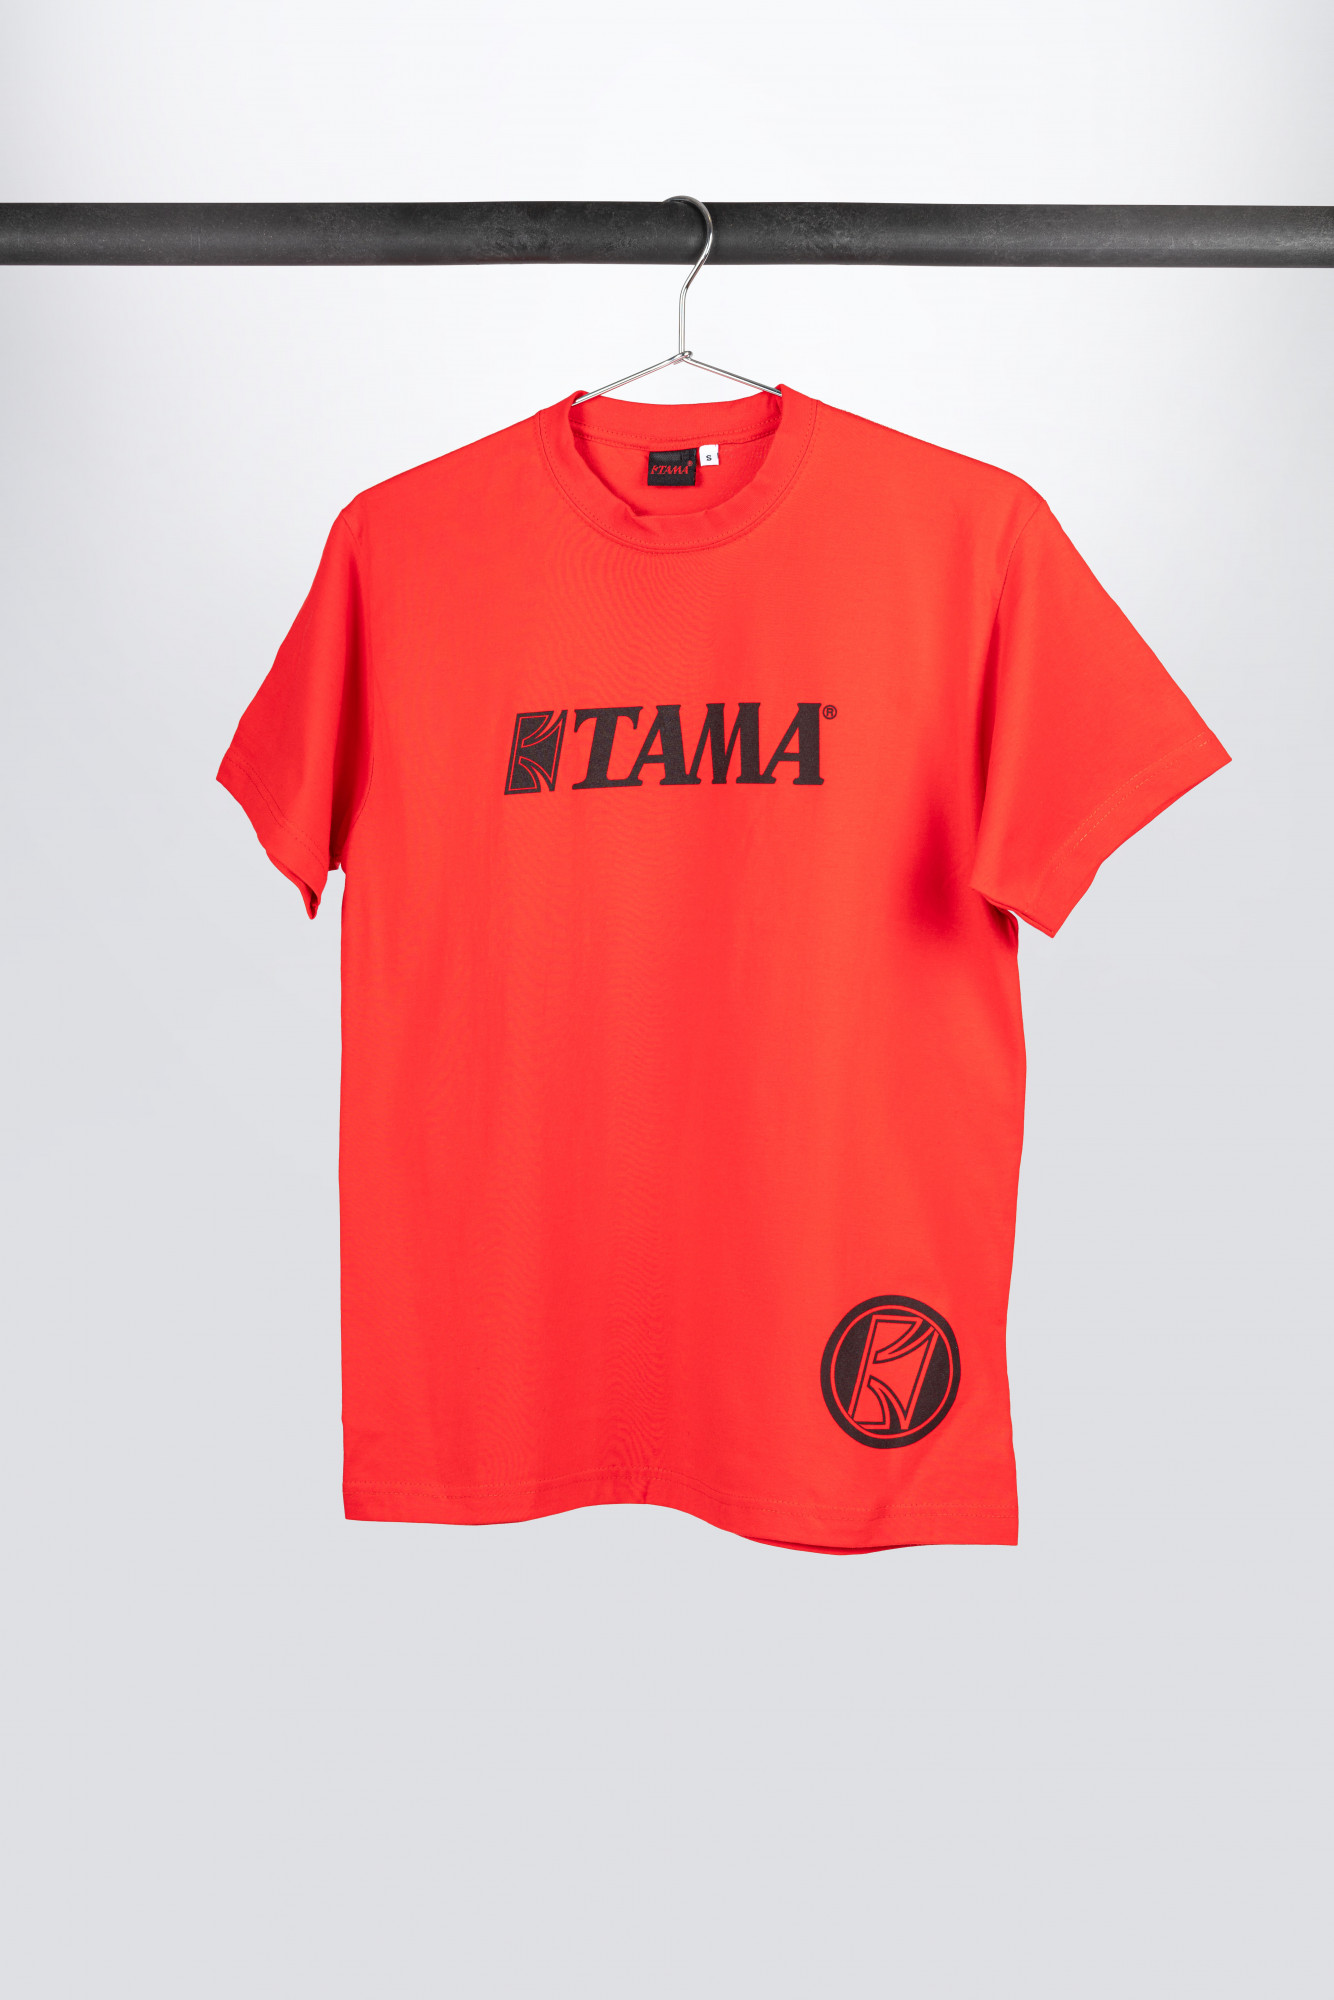 Tama t-shirt red logo on chest (TT11LG) | T-Shirts | Merchandise | Tama | MEINL Shop